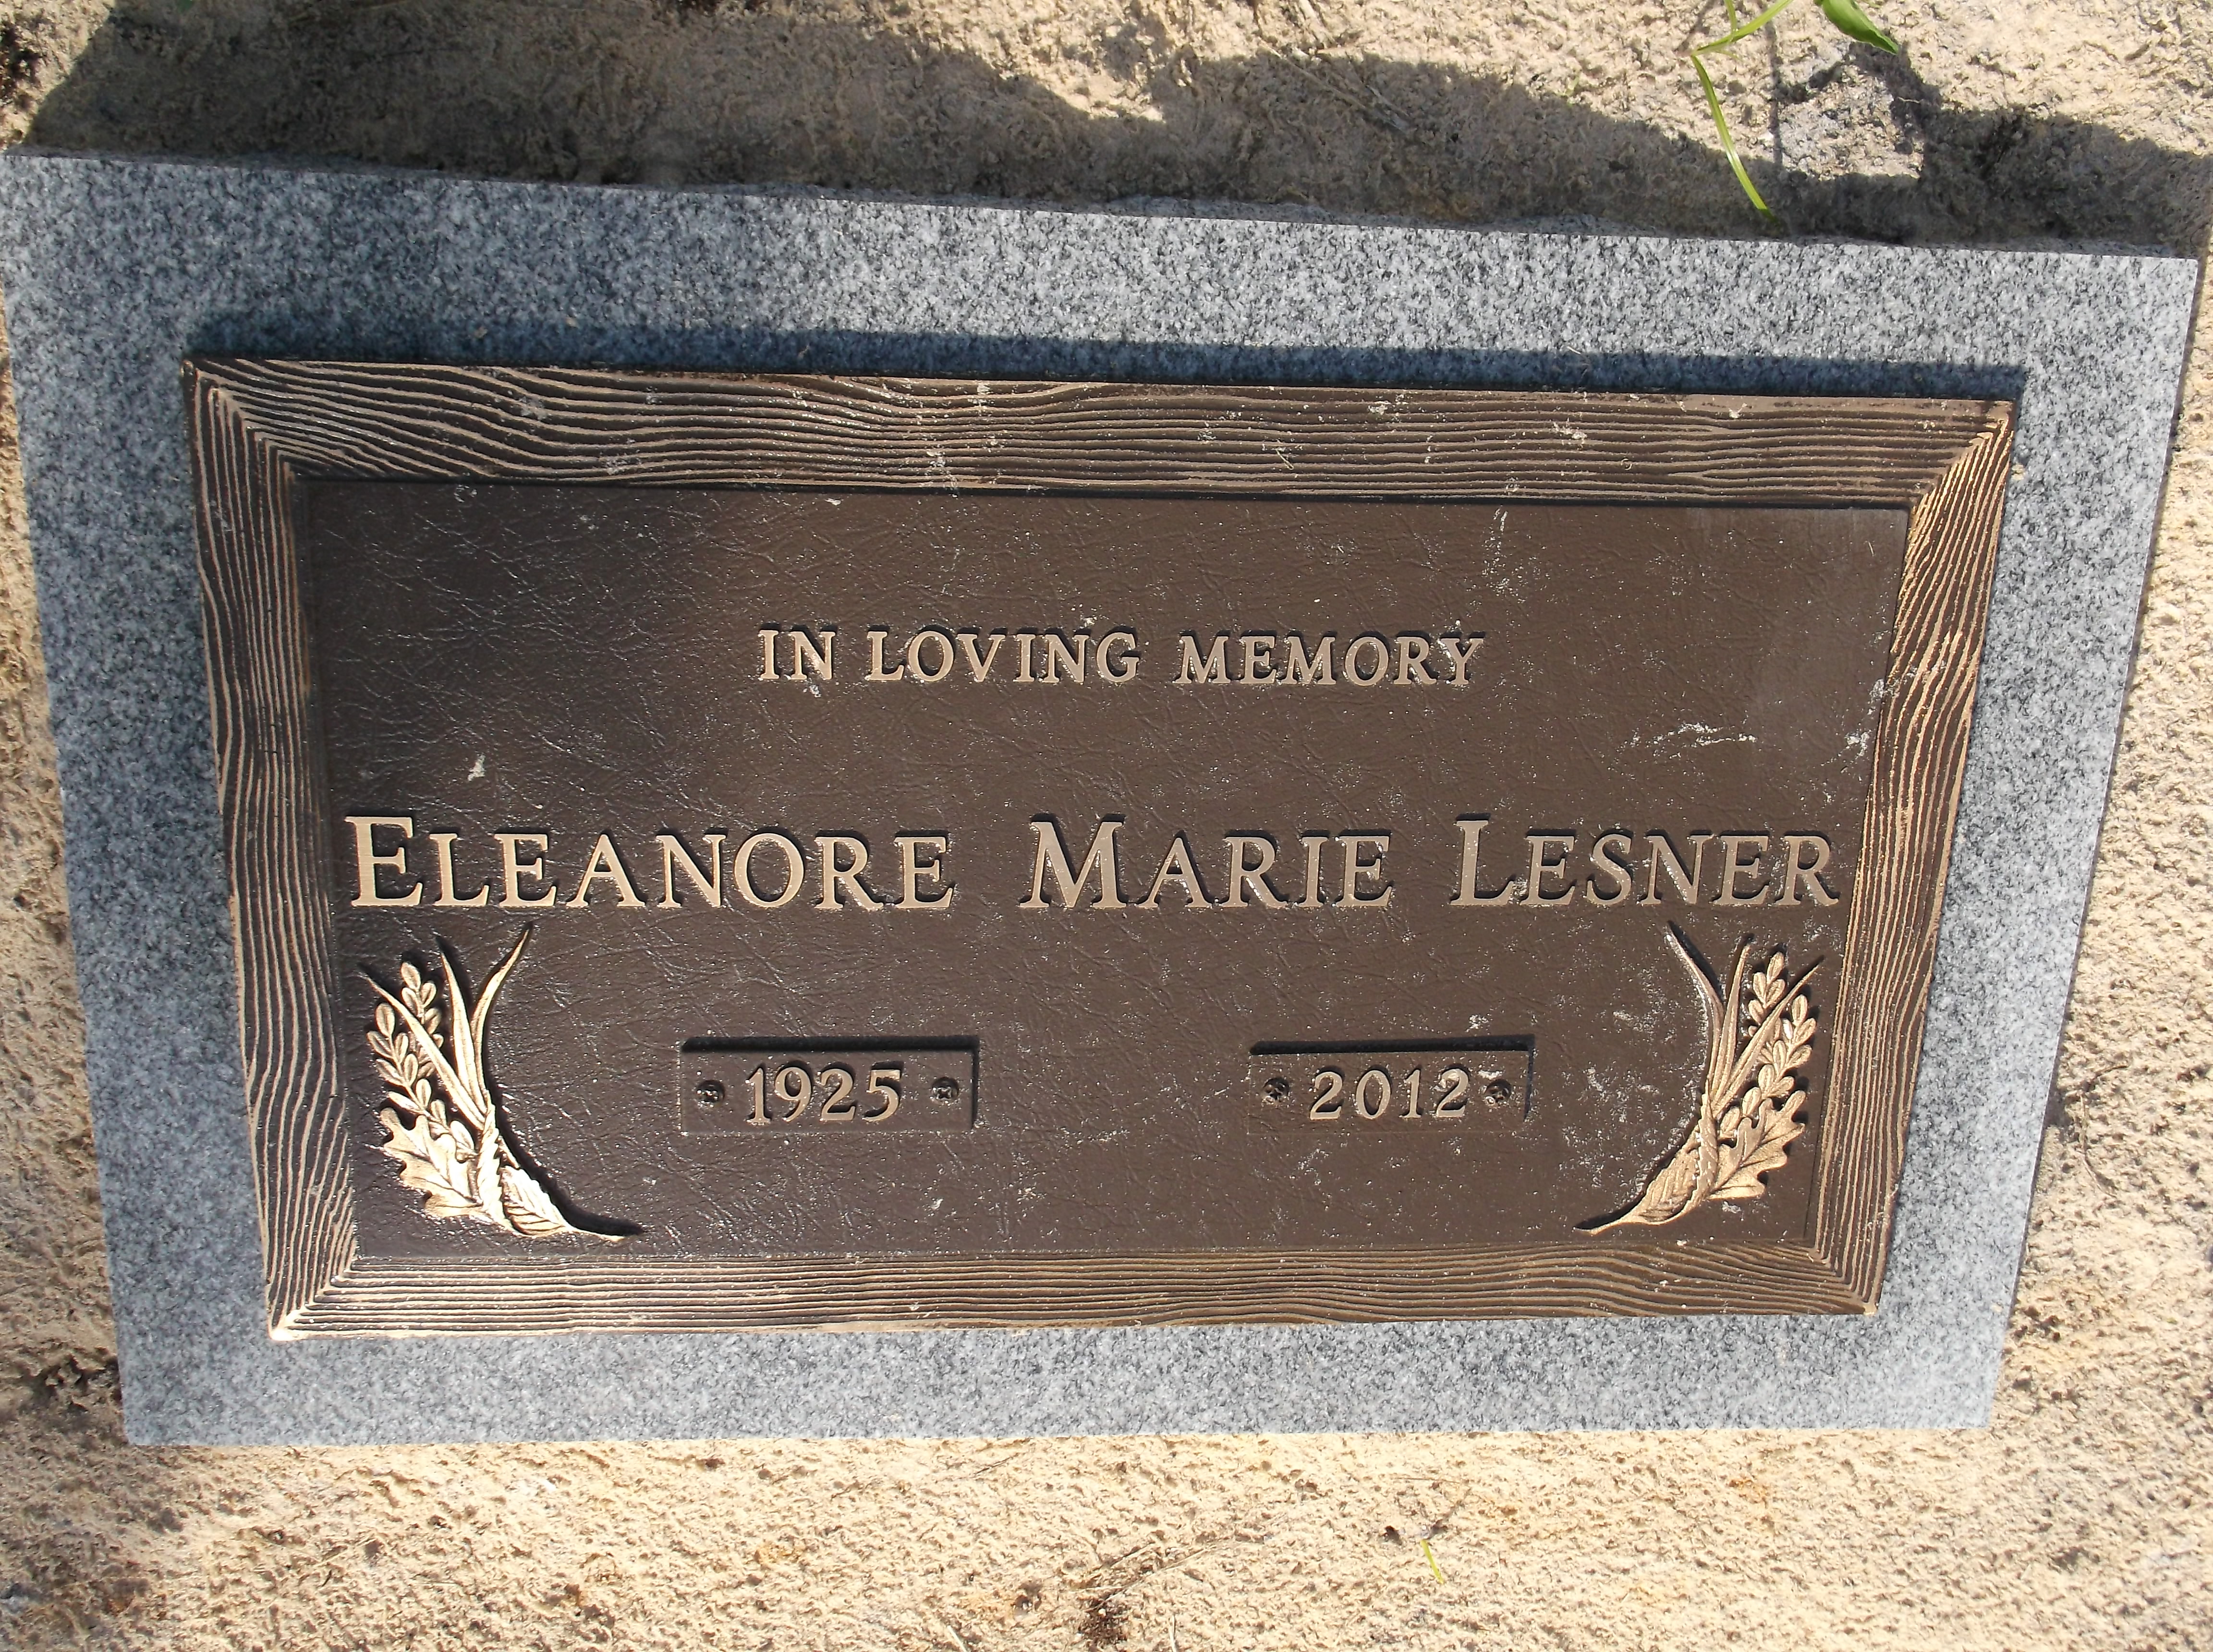 Eleanore Marie Lesner